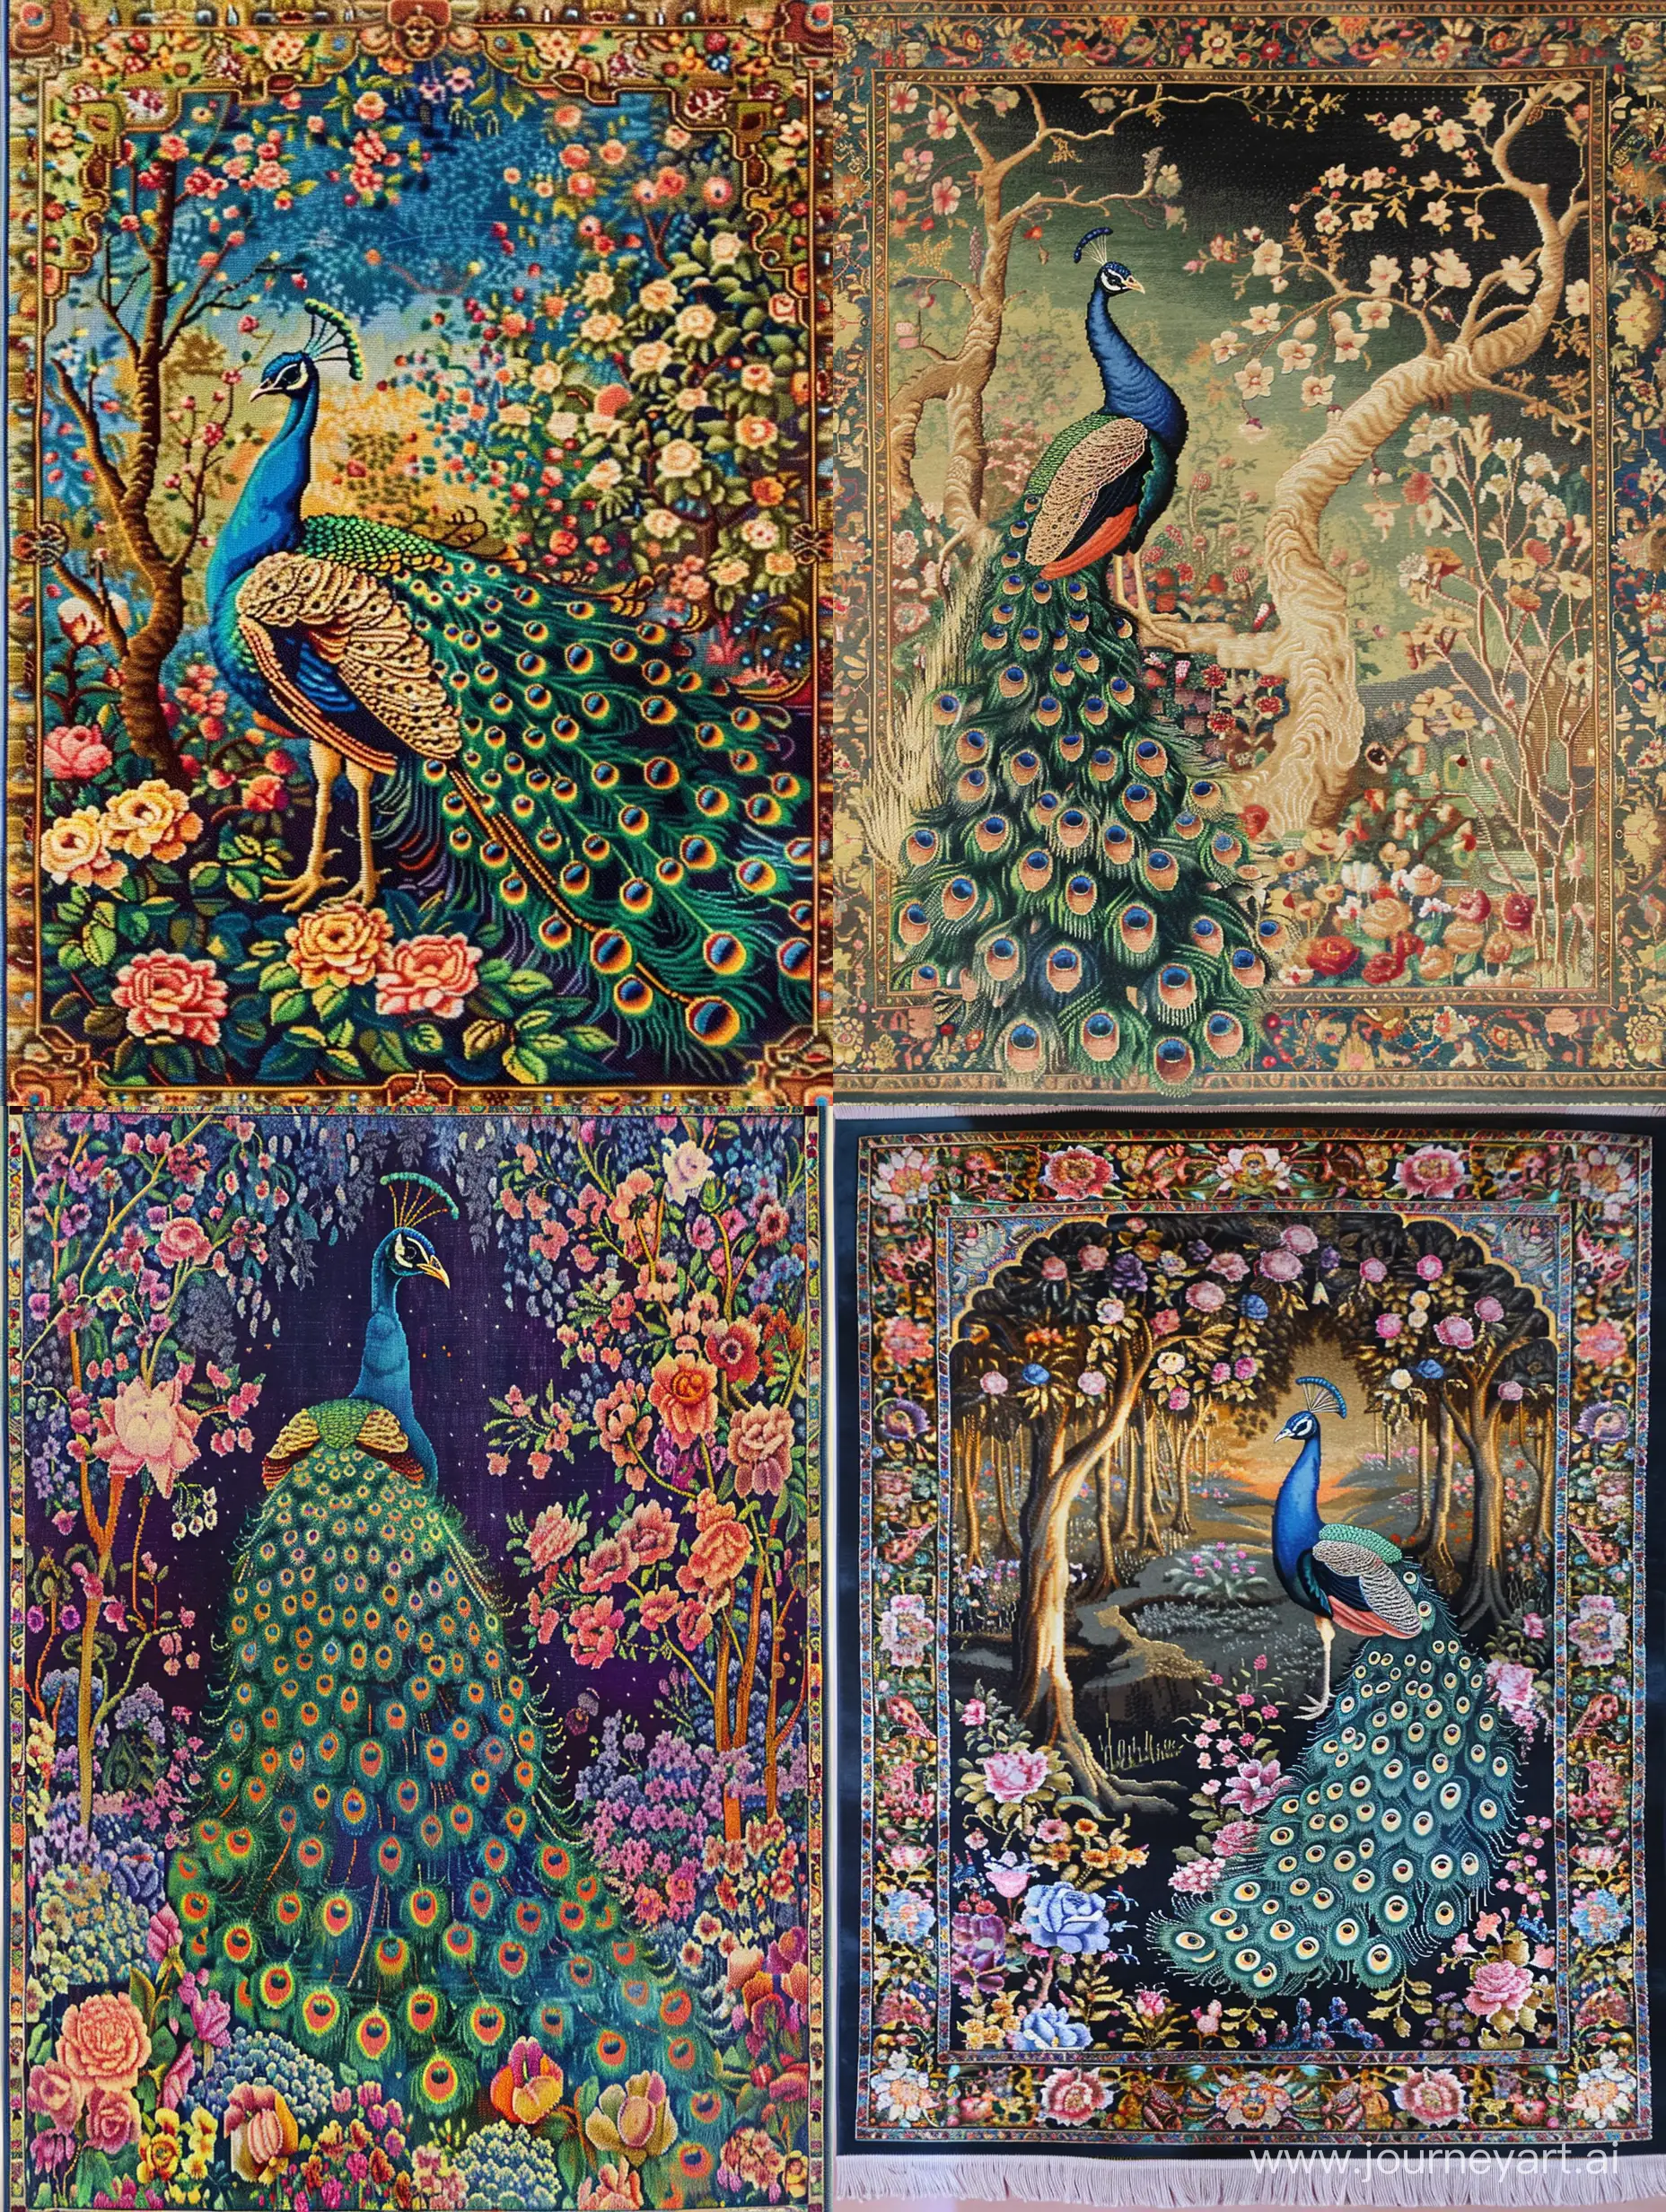 Exquisite-ThreeDimensional-Persian-Carpet-Peacock-in-Heaven-Amidst-Lush-Florals